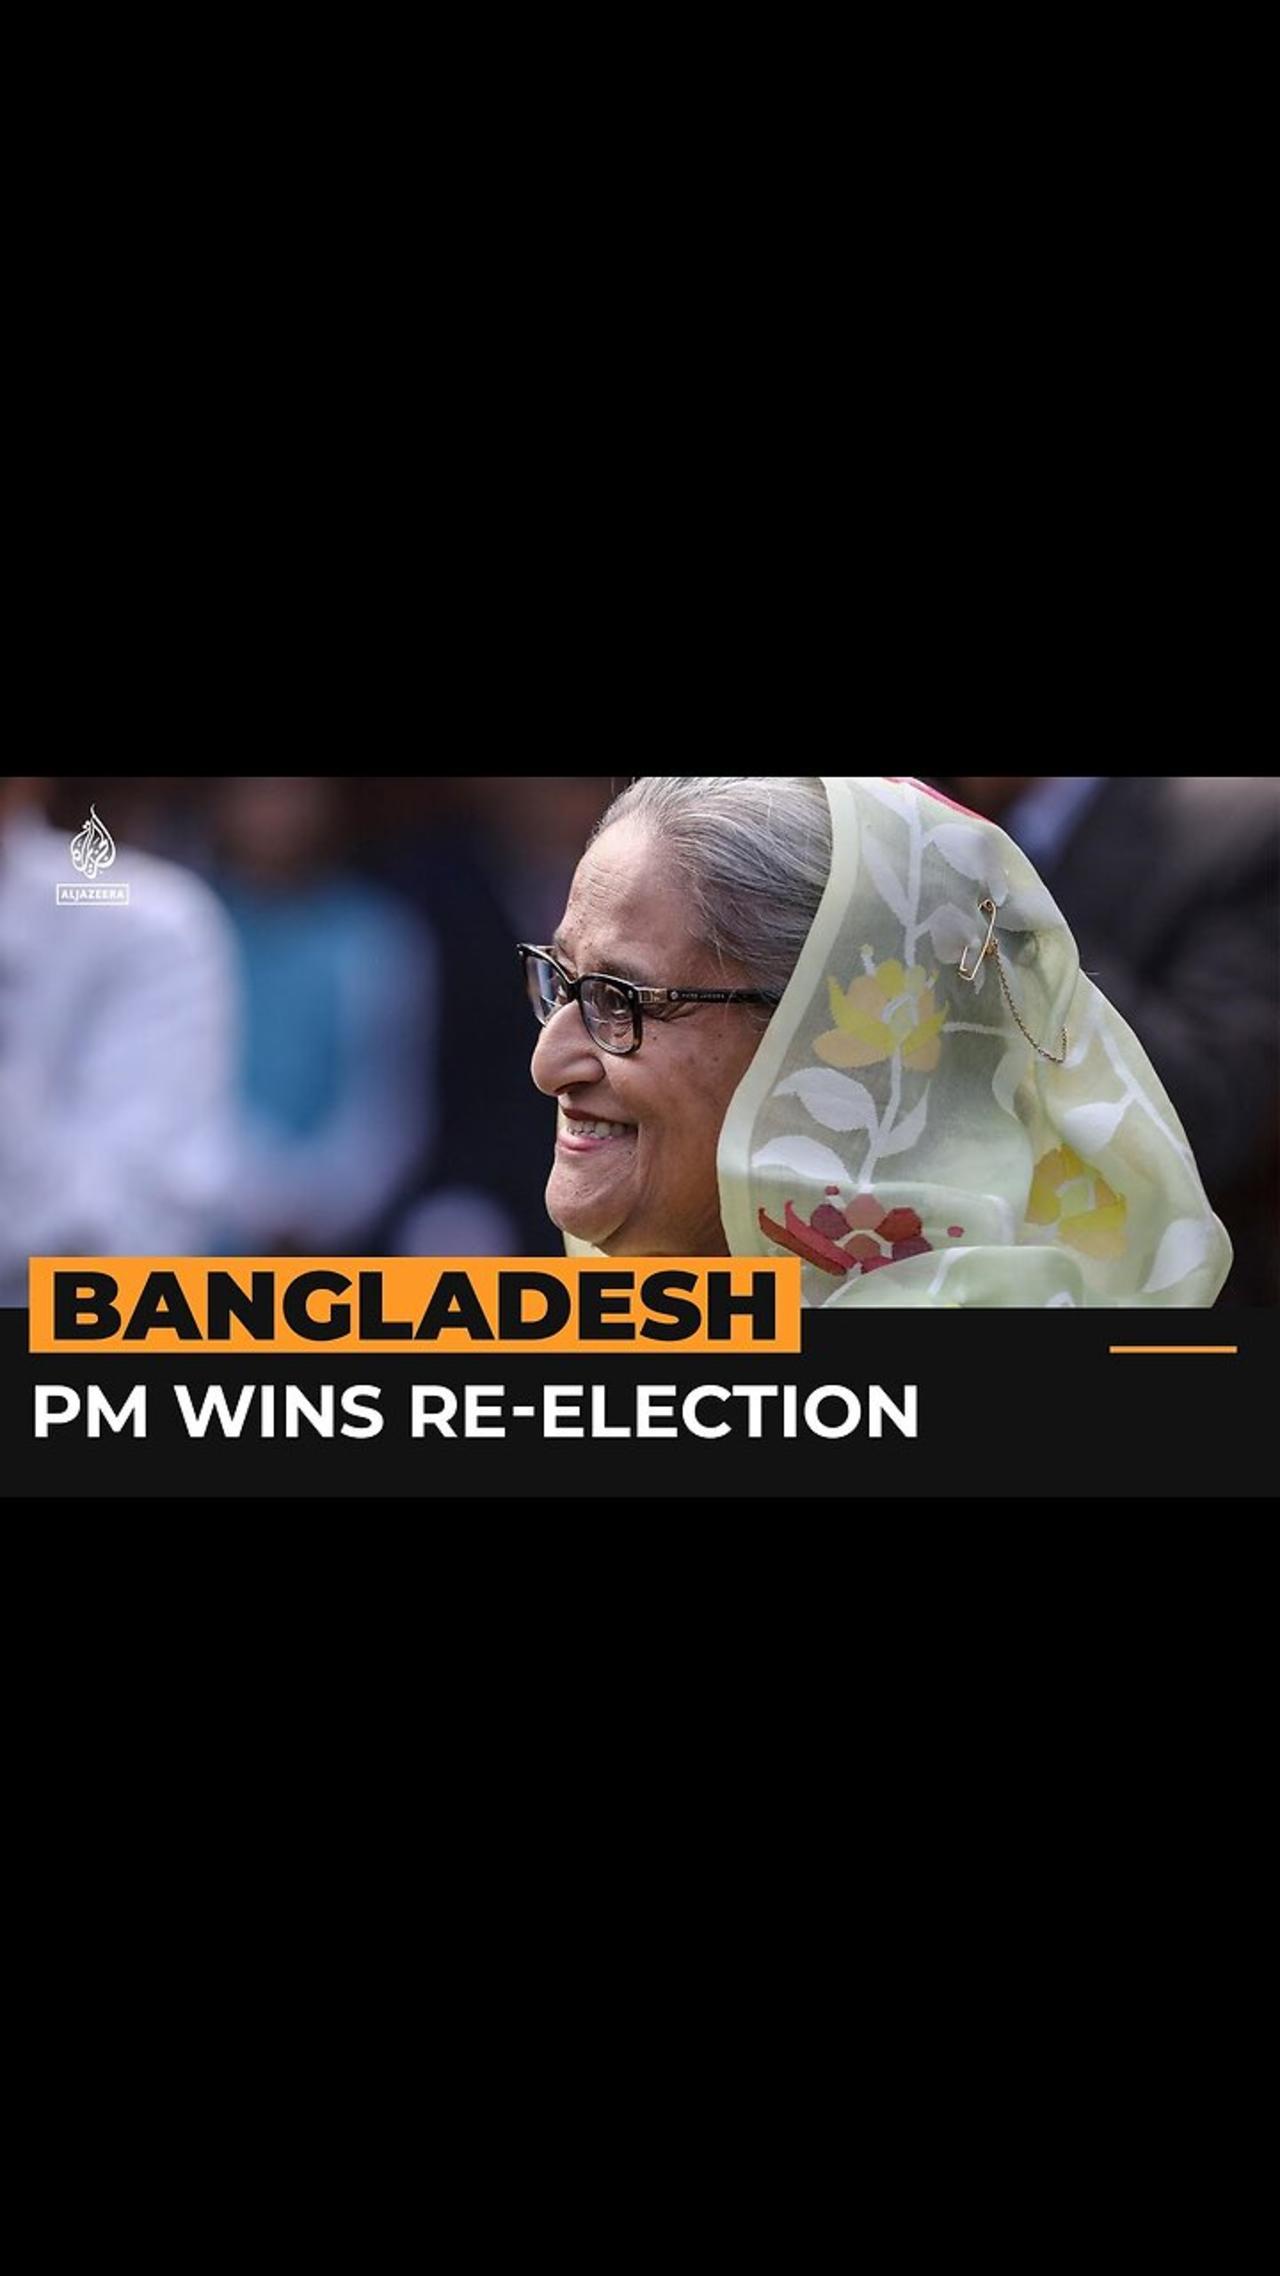 Bangladesh PM Sheikh Hasina wins controversial election | Al Jazeera Newsfeed